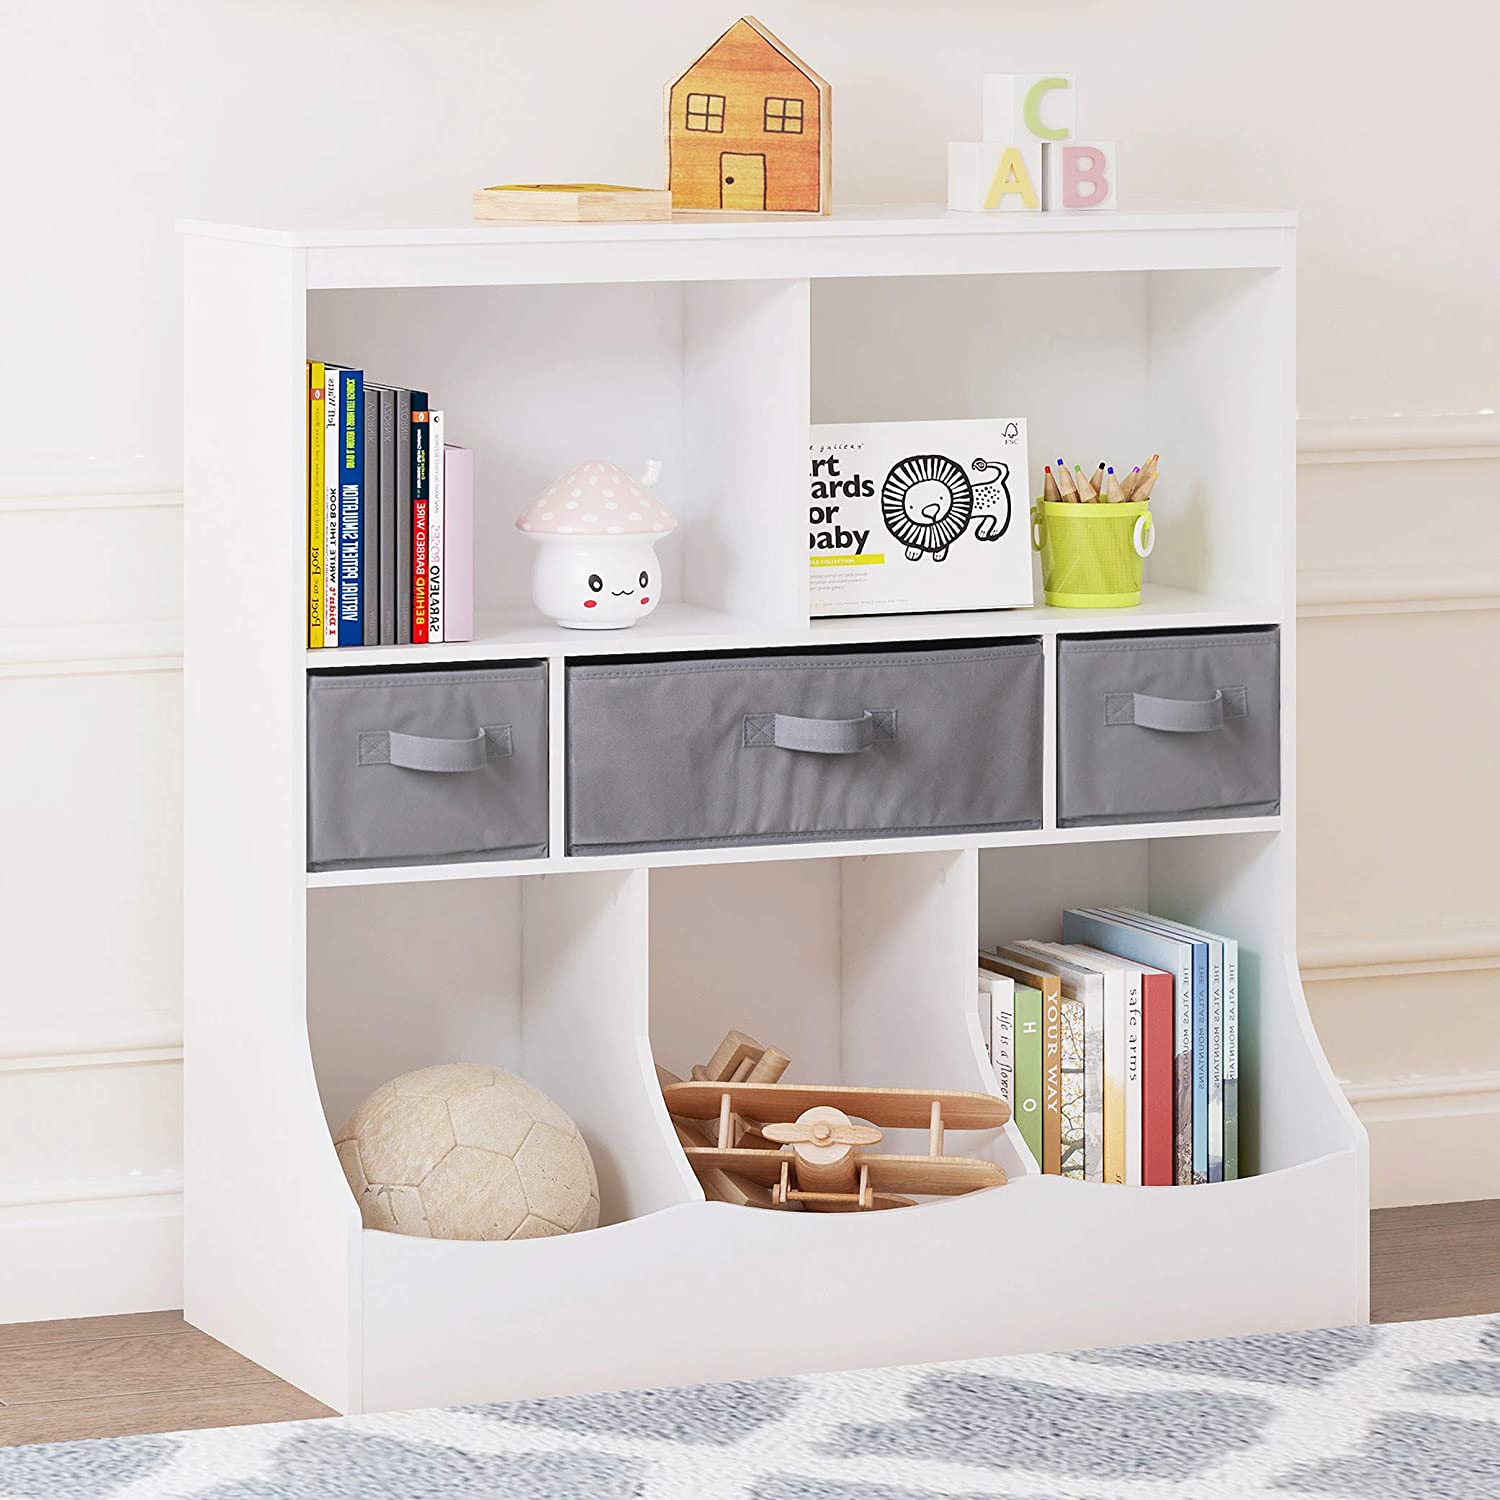 UTEX Toy Storage Organizer with Bookcase, Kid’s Bin Storage Unit with 3 Opening Shelves,White Toys Box Organizer - image 1 of 8